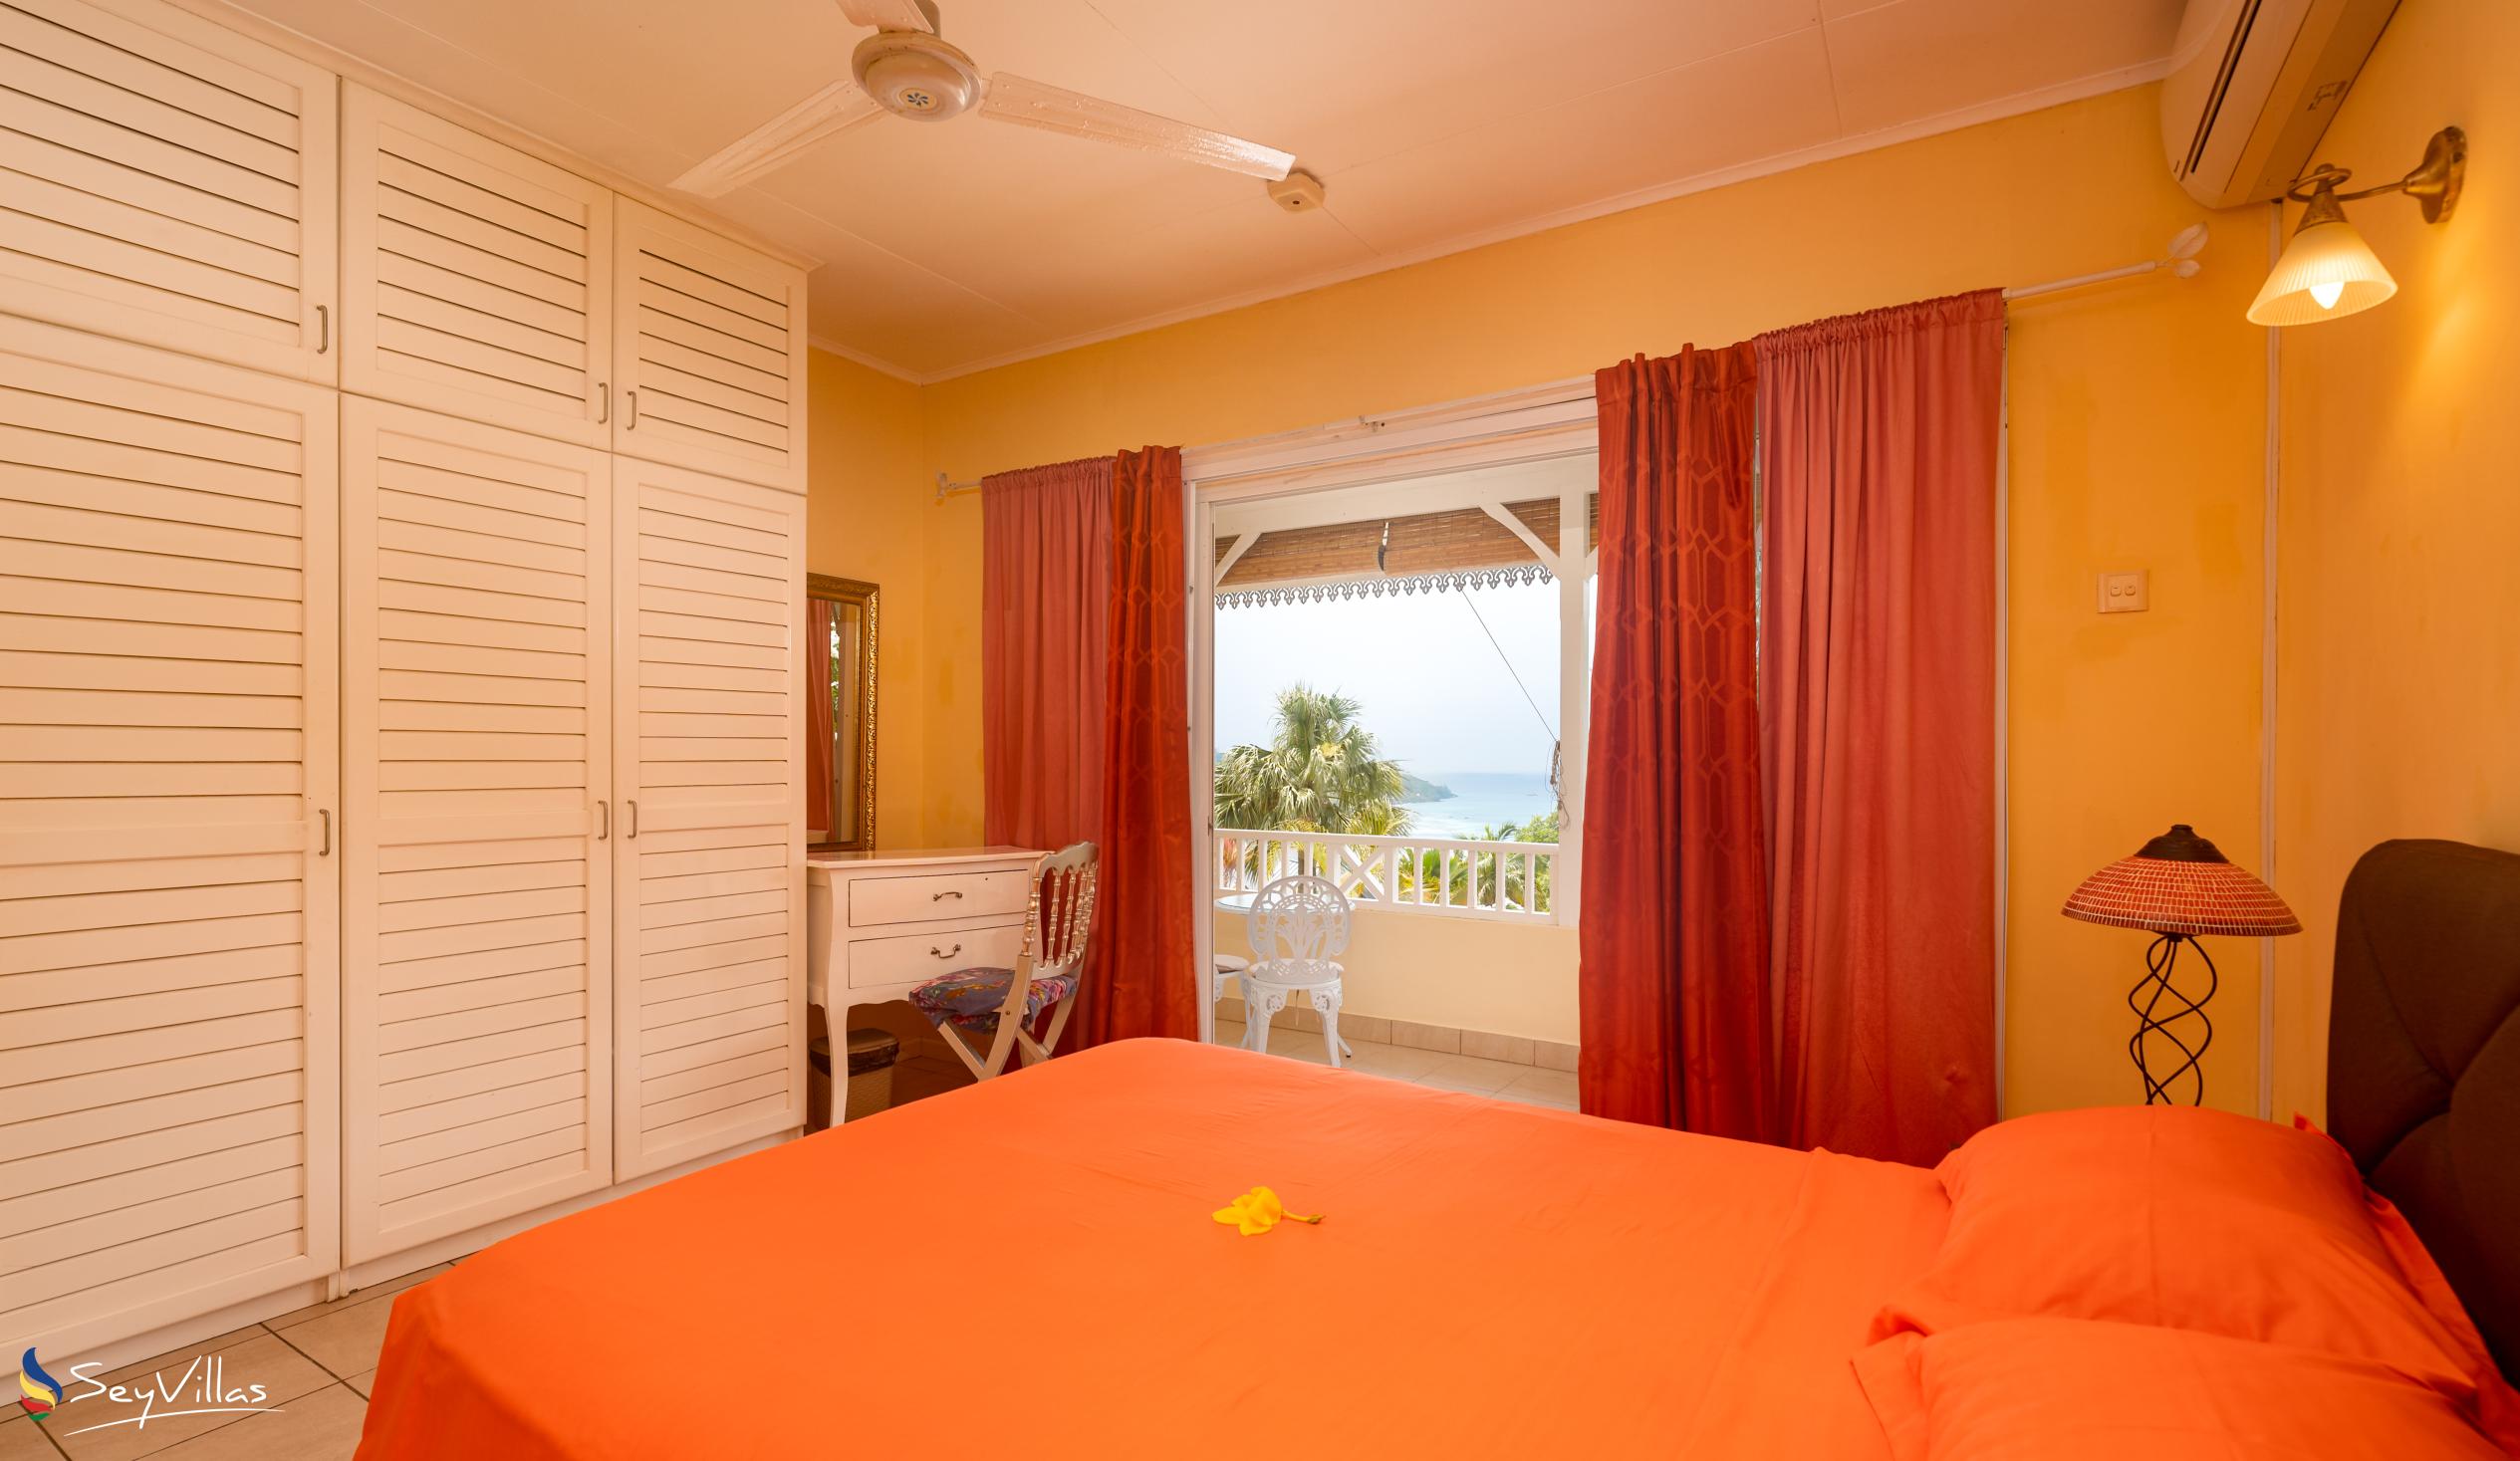 Photo 94: Residence Monte Cristo - 3-Bedroom Duplex - Mahé (Seychelles)